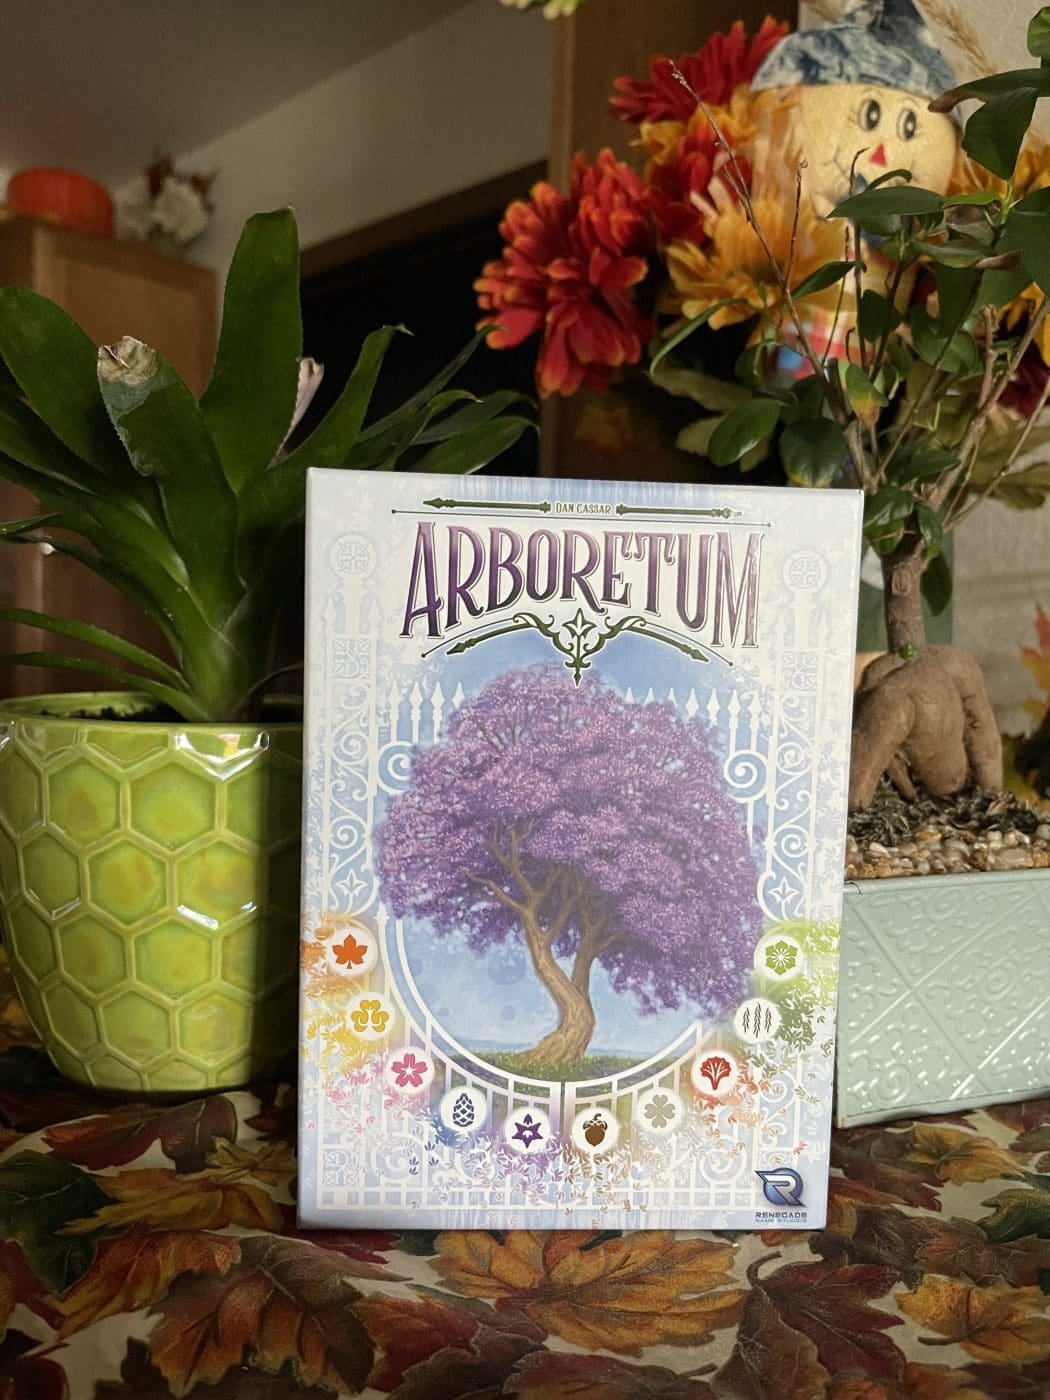 The box for Arboretum with plants around it